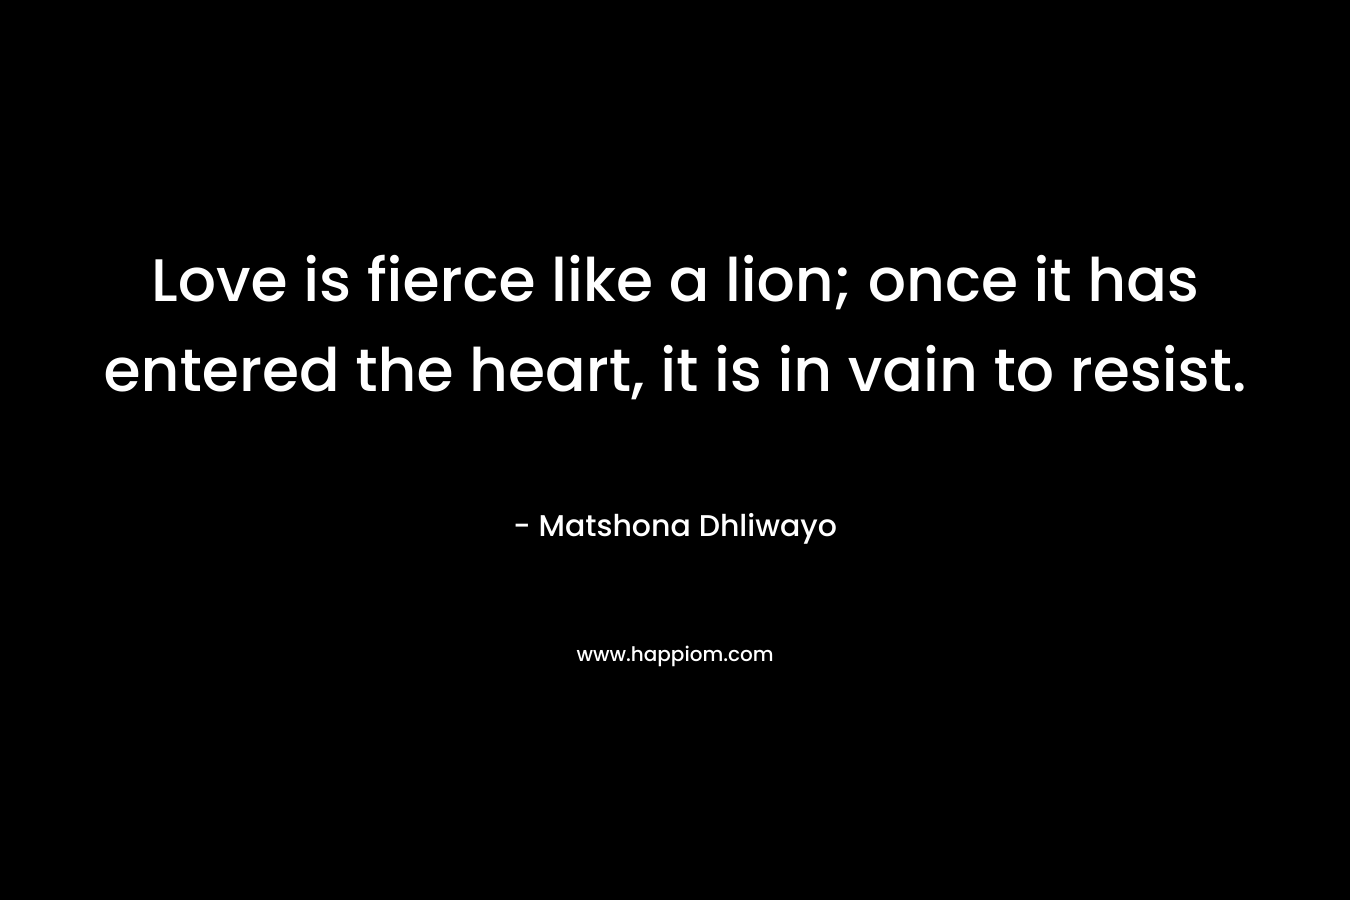 Love is fierce like a lion; once it has entered the heart, it is in vain to resist.